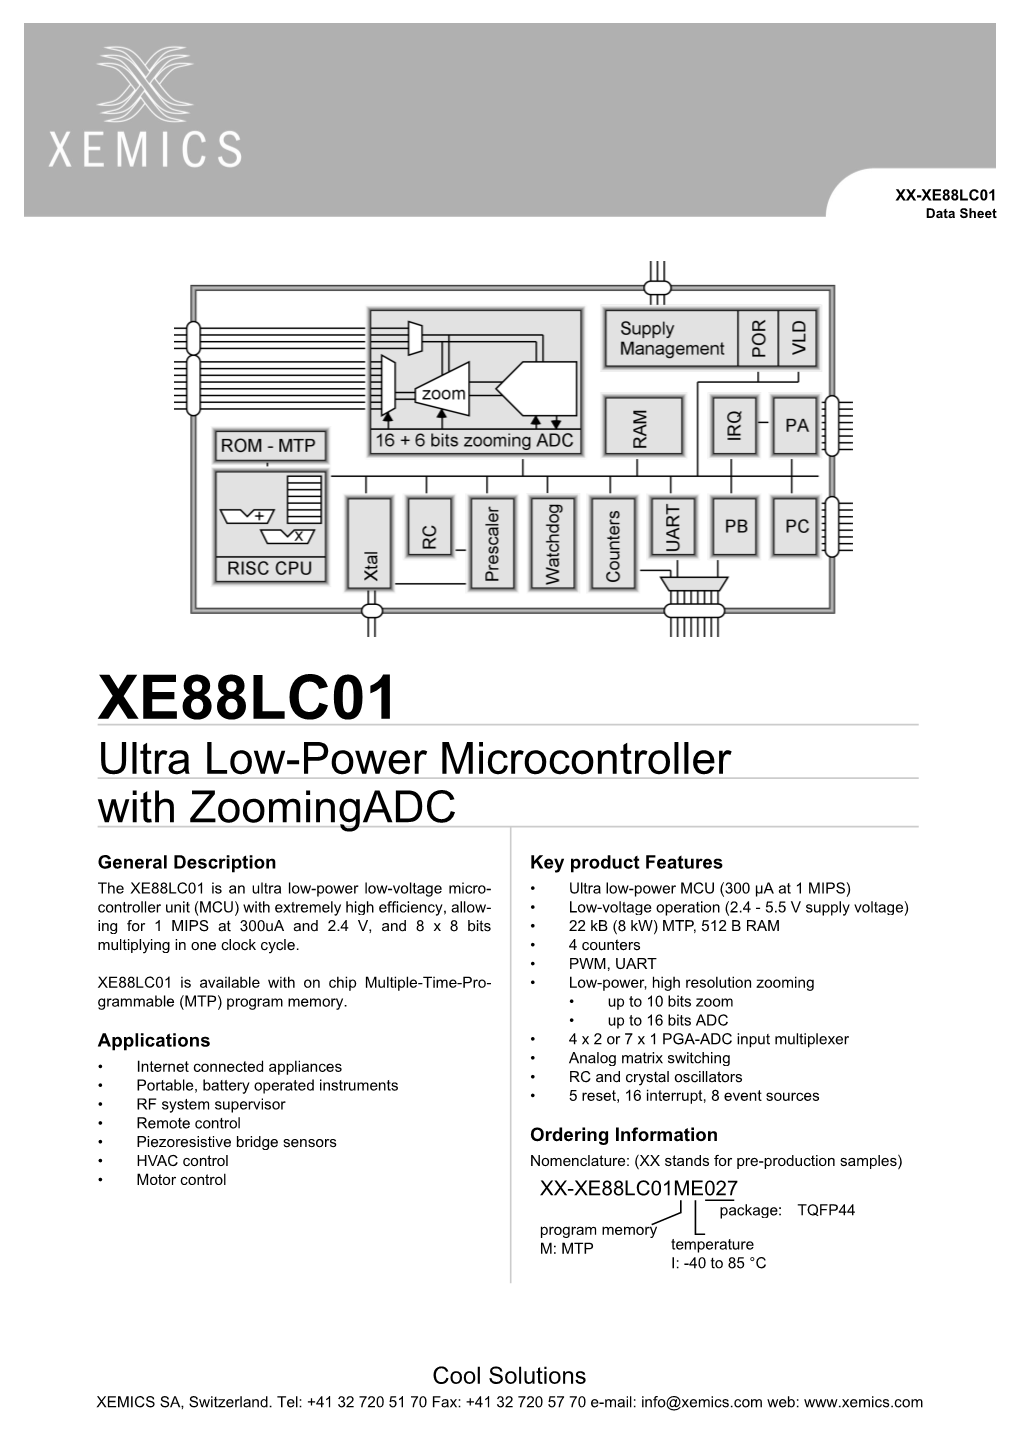 XE88LC01 Data Sheet